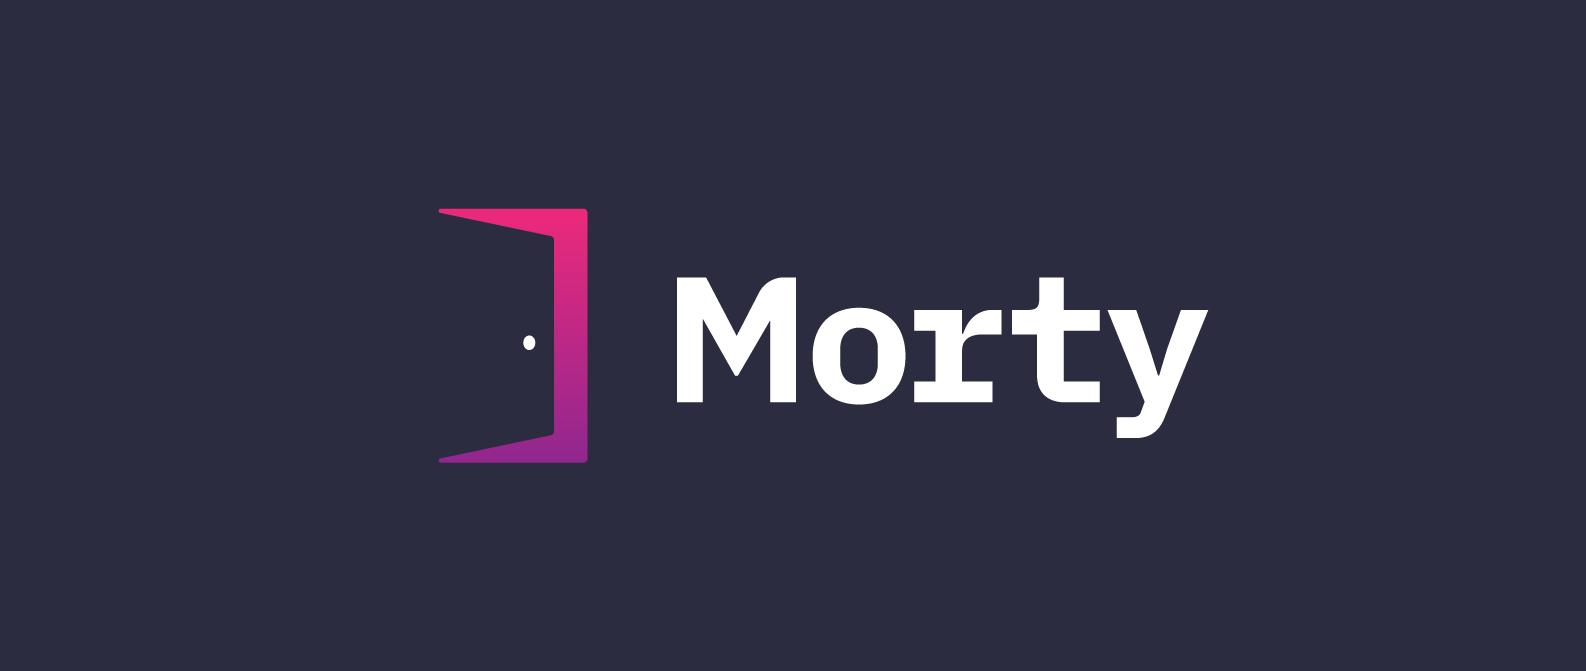 Morty Logo